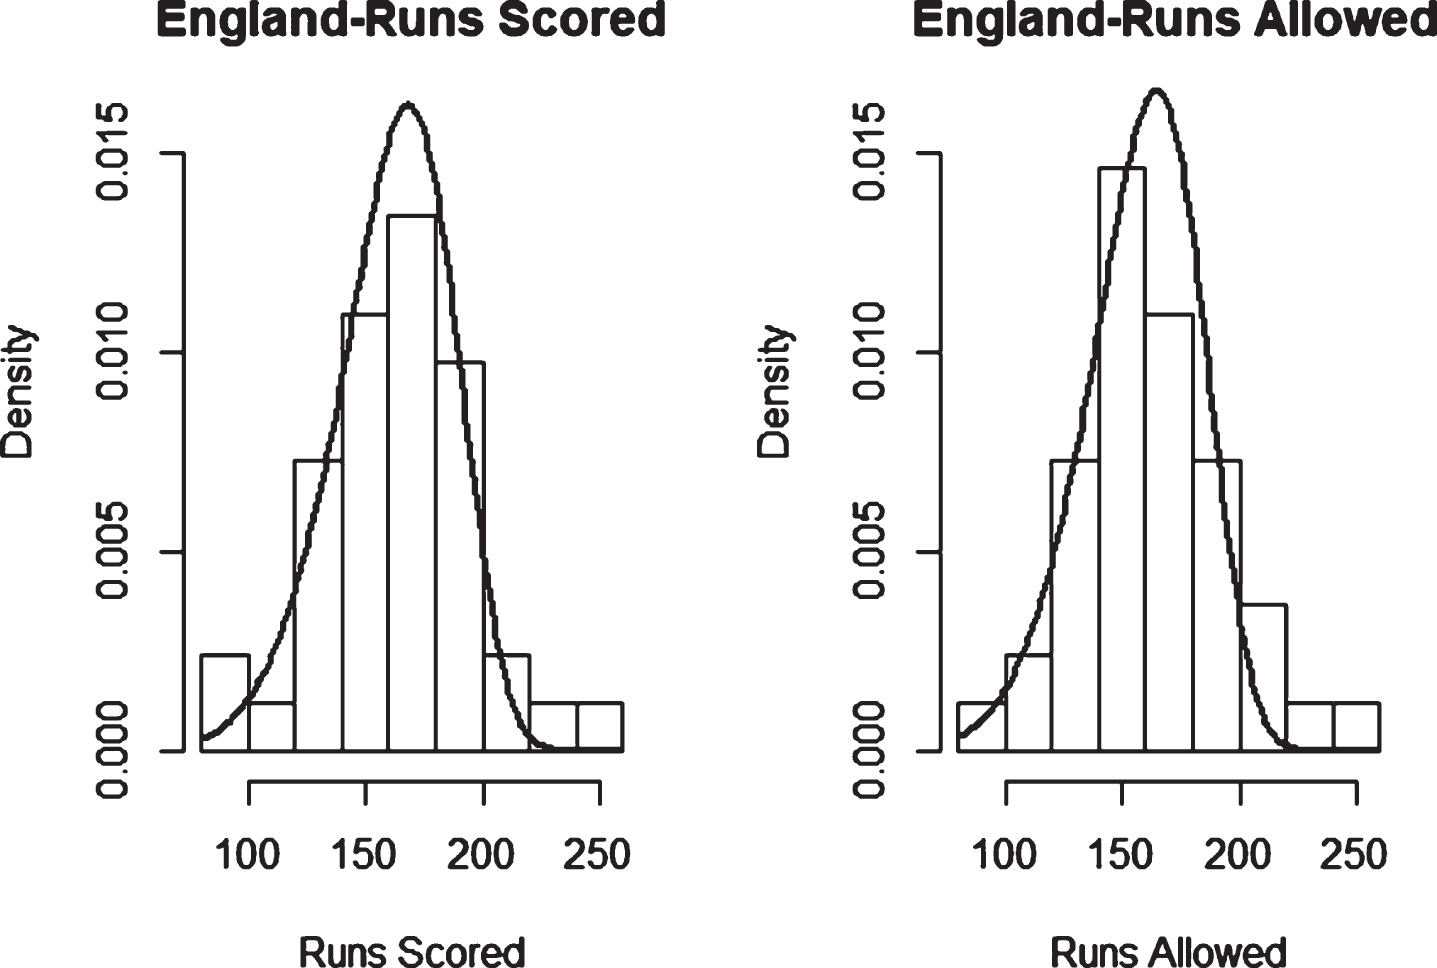 Weibull Distribution Fit for Runs Scored and Runs Allowed for England using Maximum Likelihood Method (Twenty20).